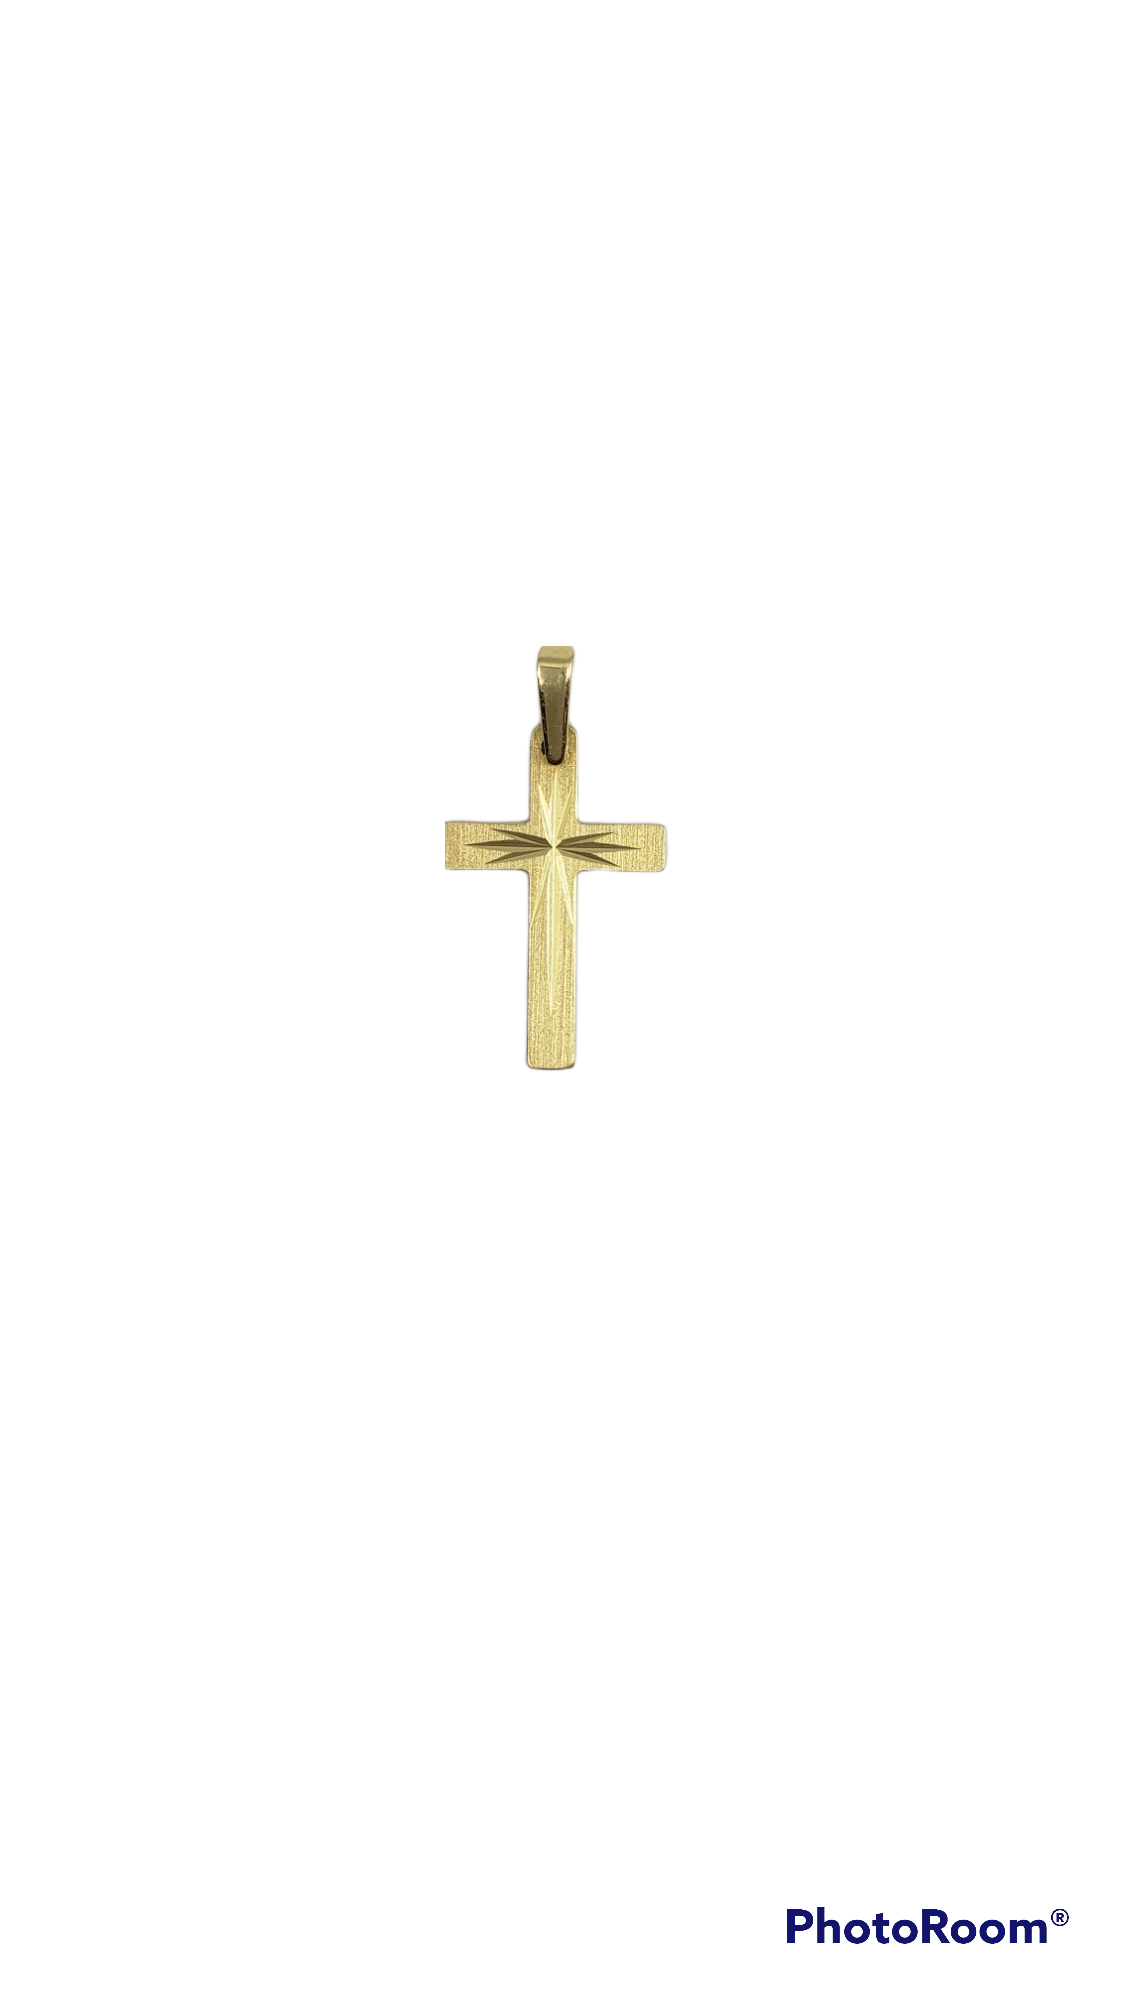 Dije de cruz central grabada en oro amarillo de 10 quilates - 16 mm x 10 mm